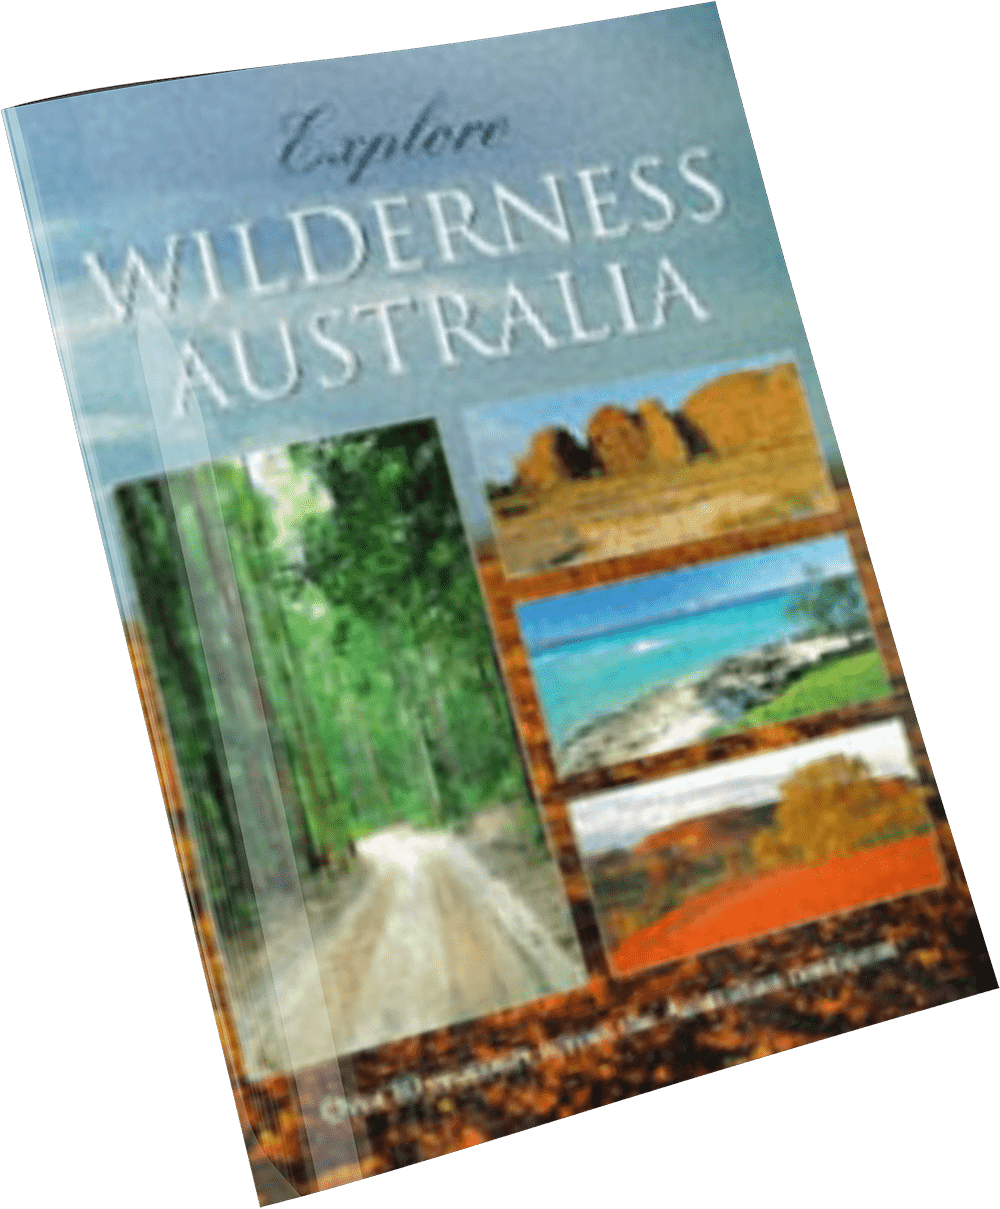 Neil Hermes Book: Explore Wilderness Australia